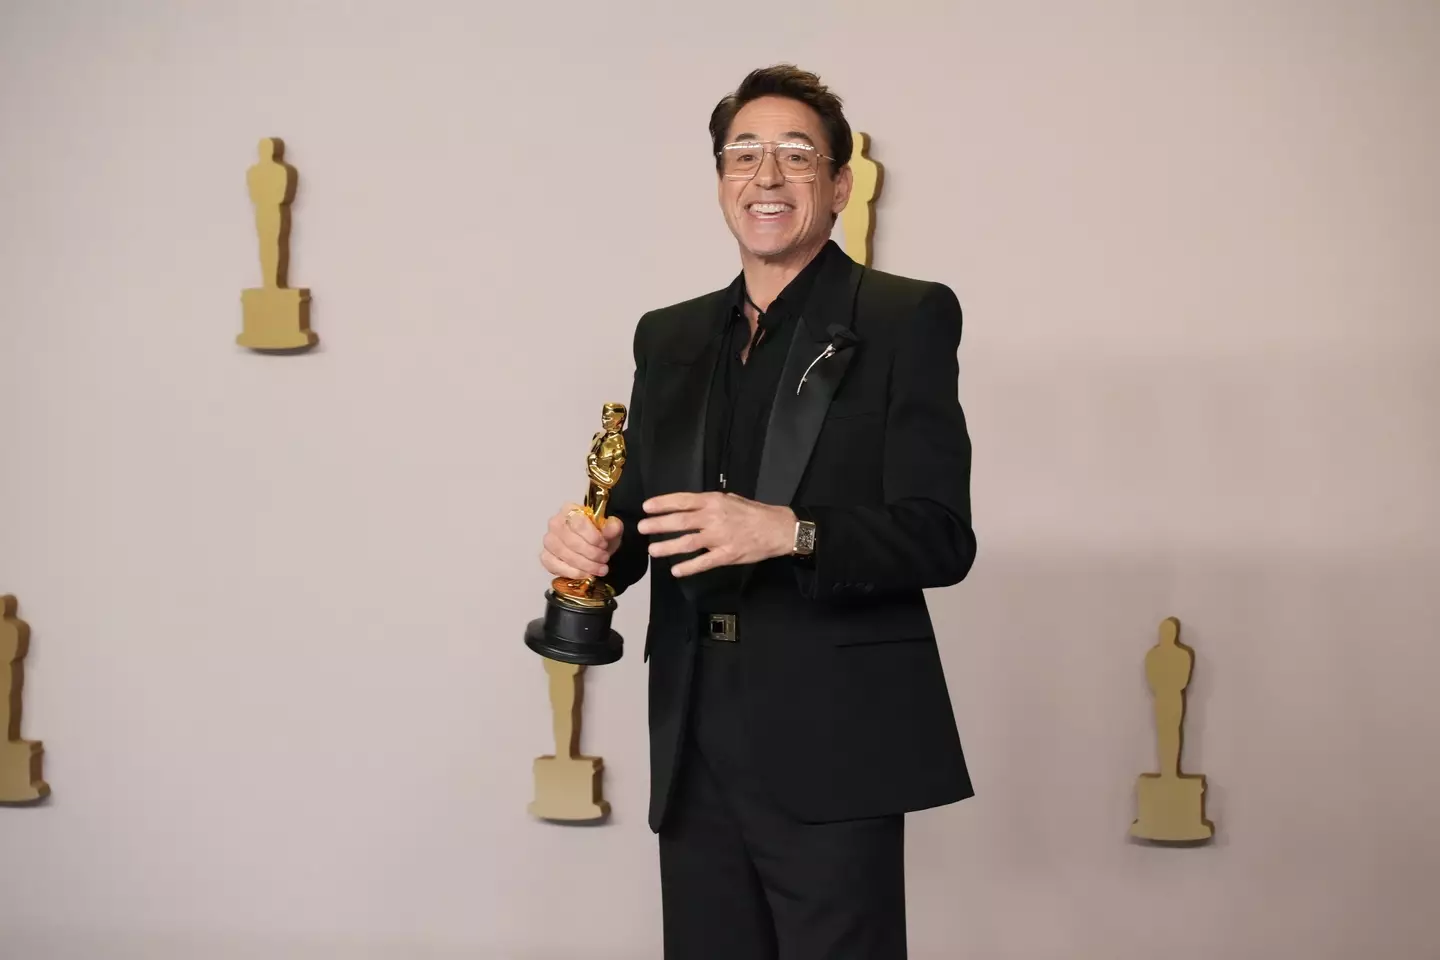 Robert Downey Jr won an Oscar for his performance in Oppenheimer.